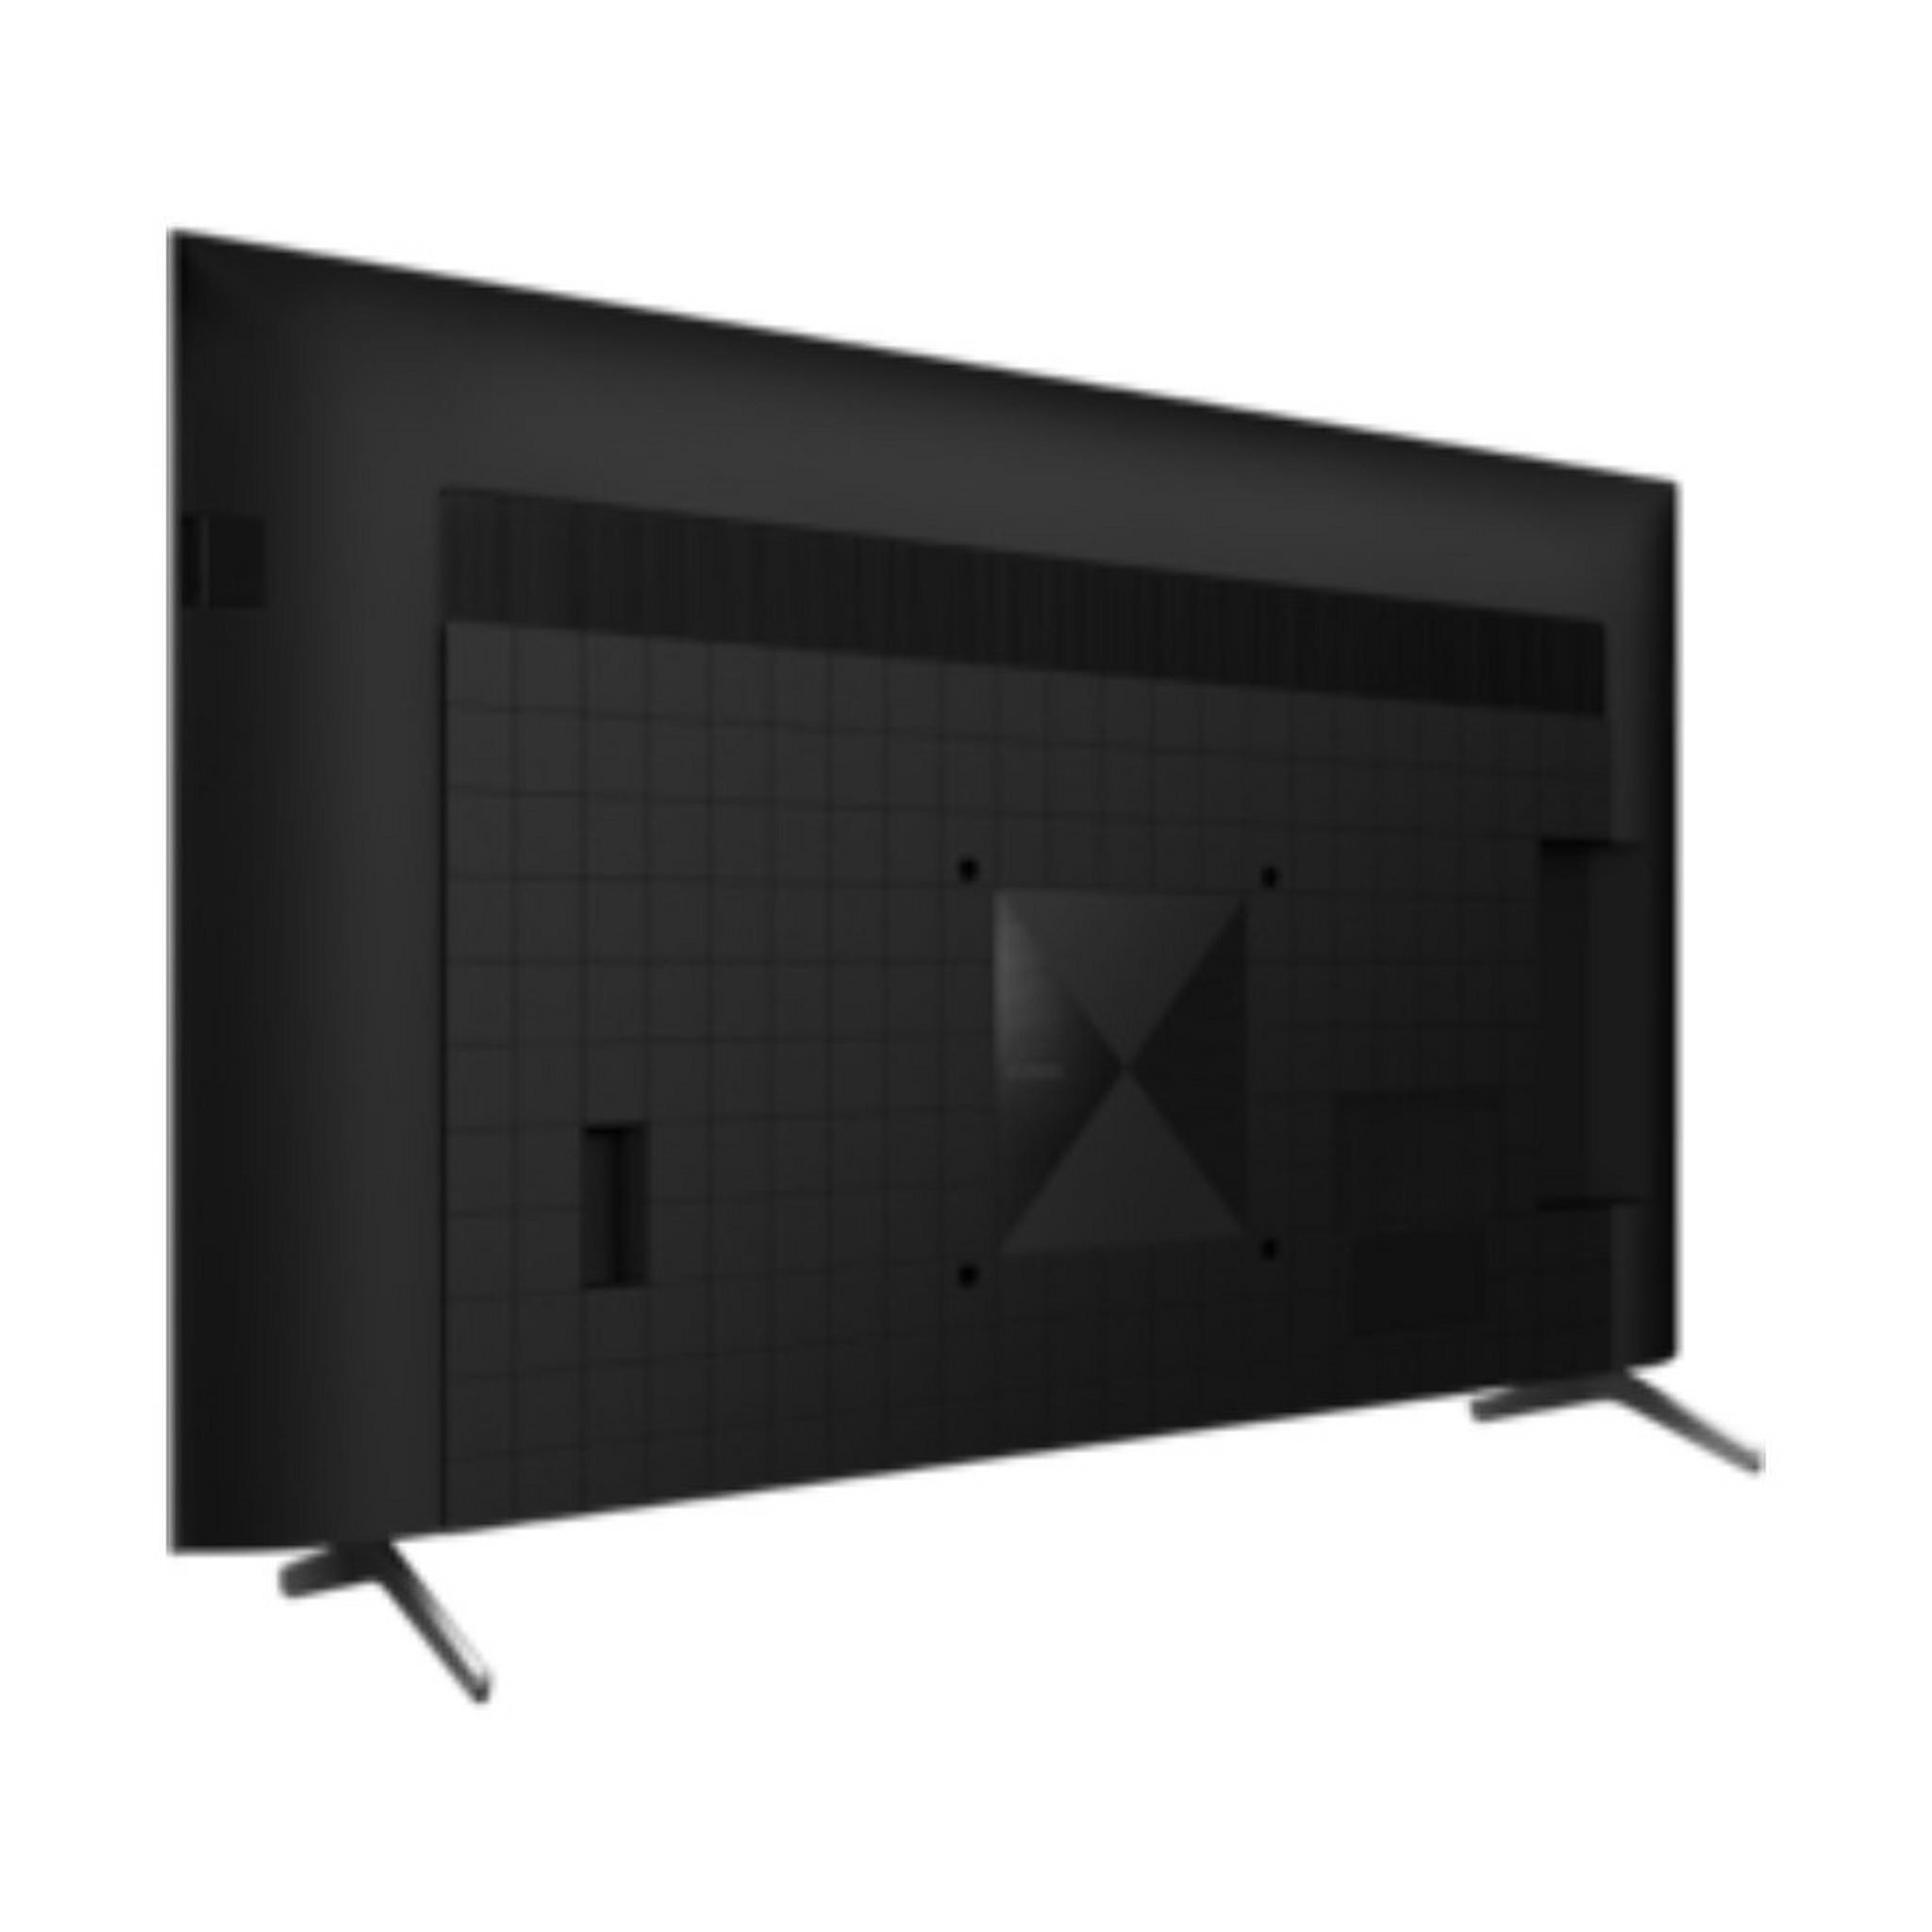 تلفزيون سوني سلسلة X90J بحجم 65 بوصة 4 كي ال اي دي  (XR-65X90J)